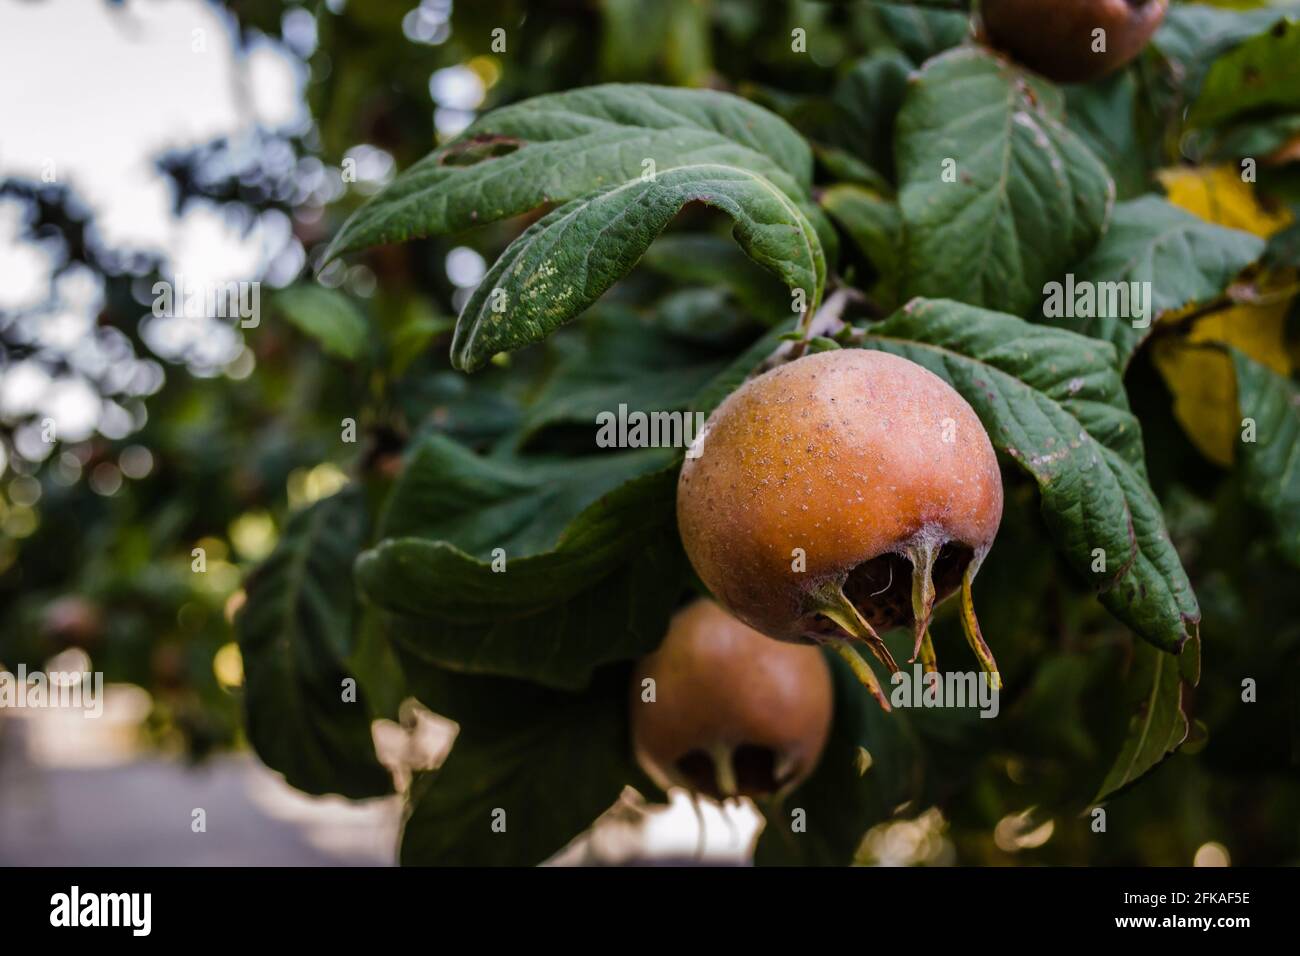 Medlar fruit on a branch. Fruit of Mespilus germanica. Stock Photo